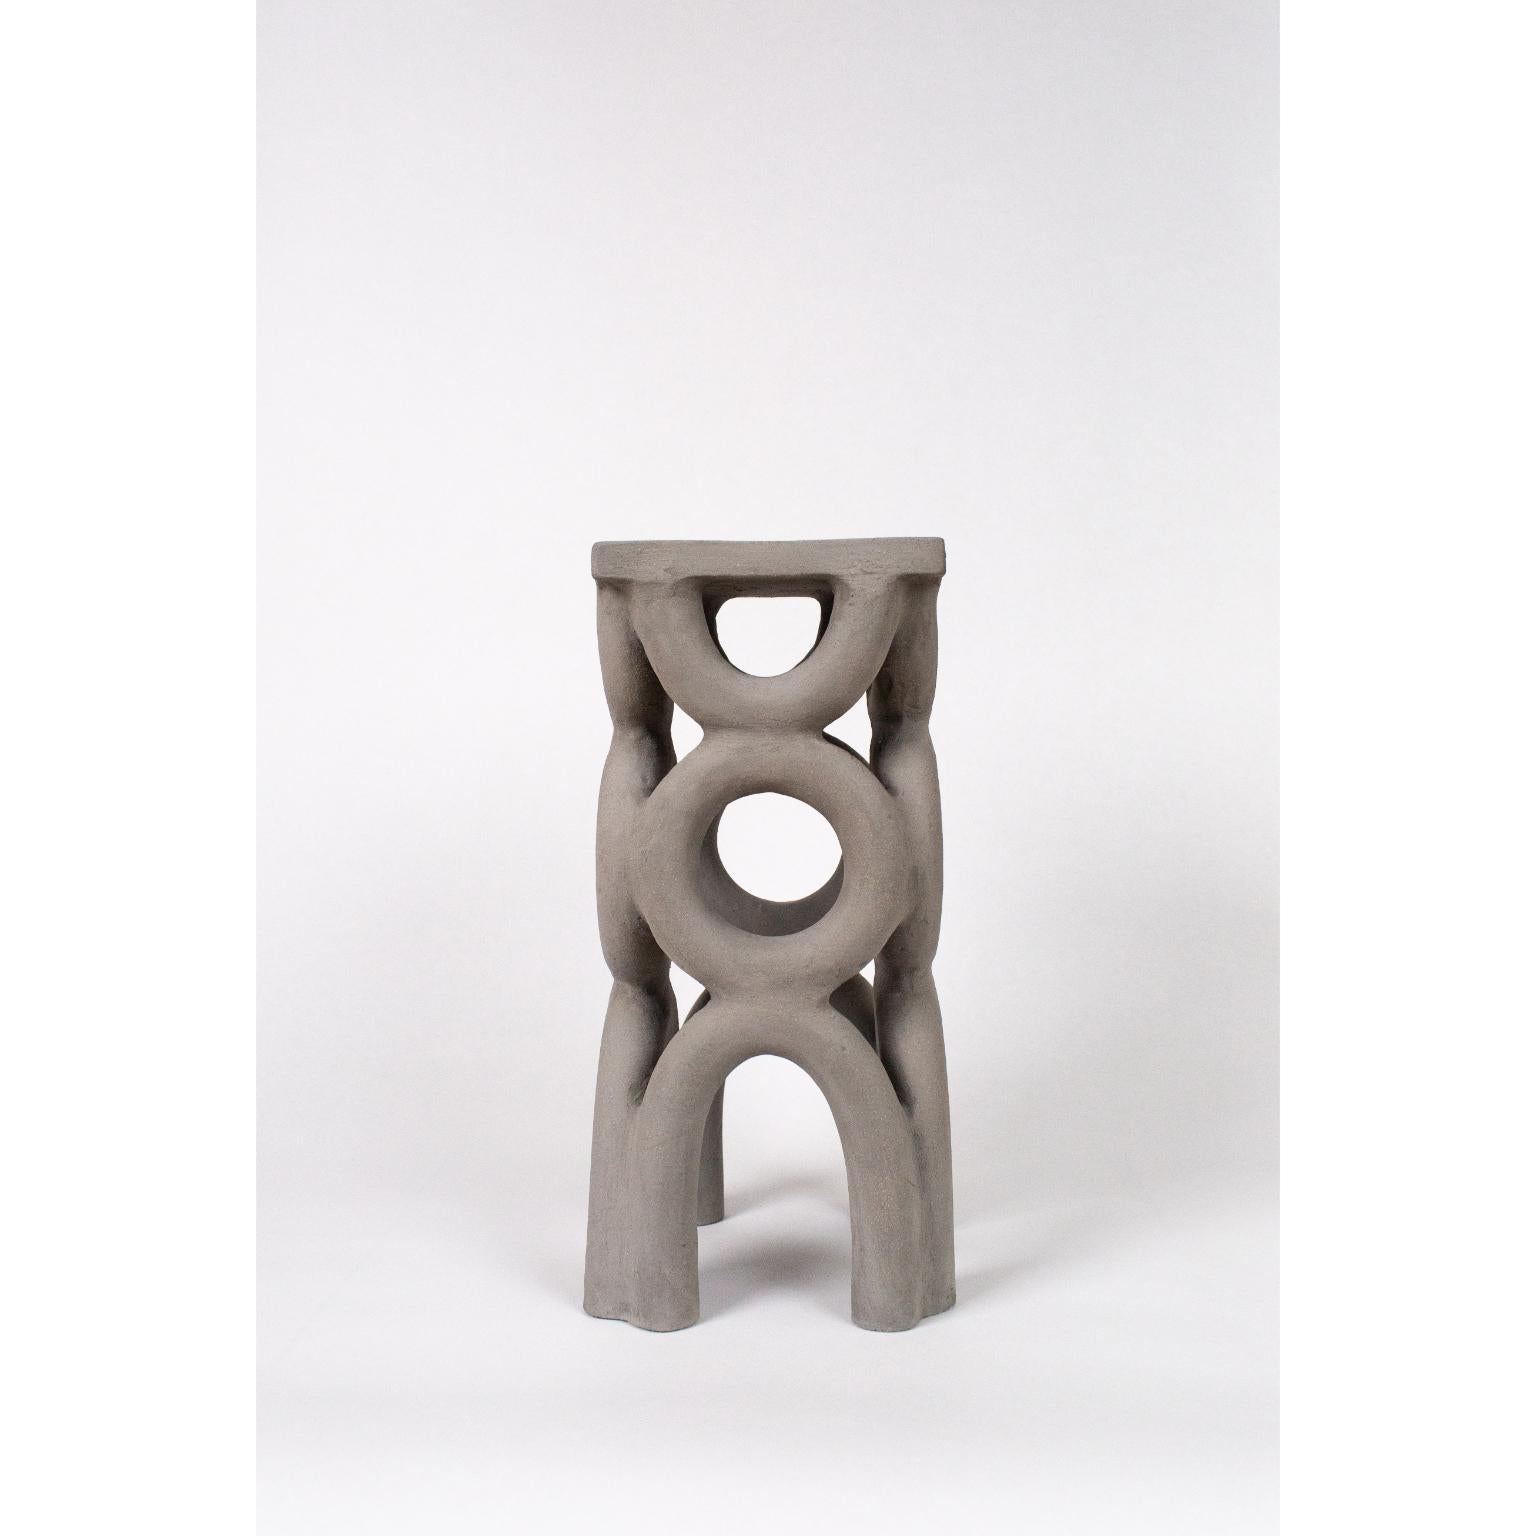 Unique arch square stool by Mesut Öztürk
Dimensions:  W 20 x D 20 x  H 40 cm
Materials: Stoneware 

